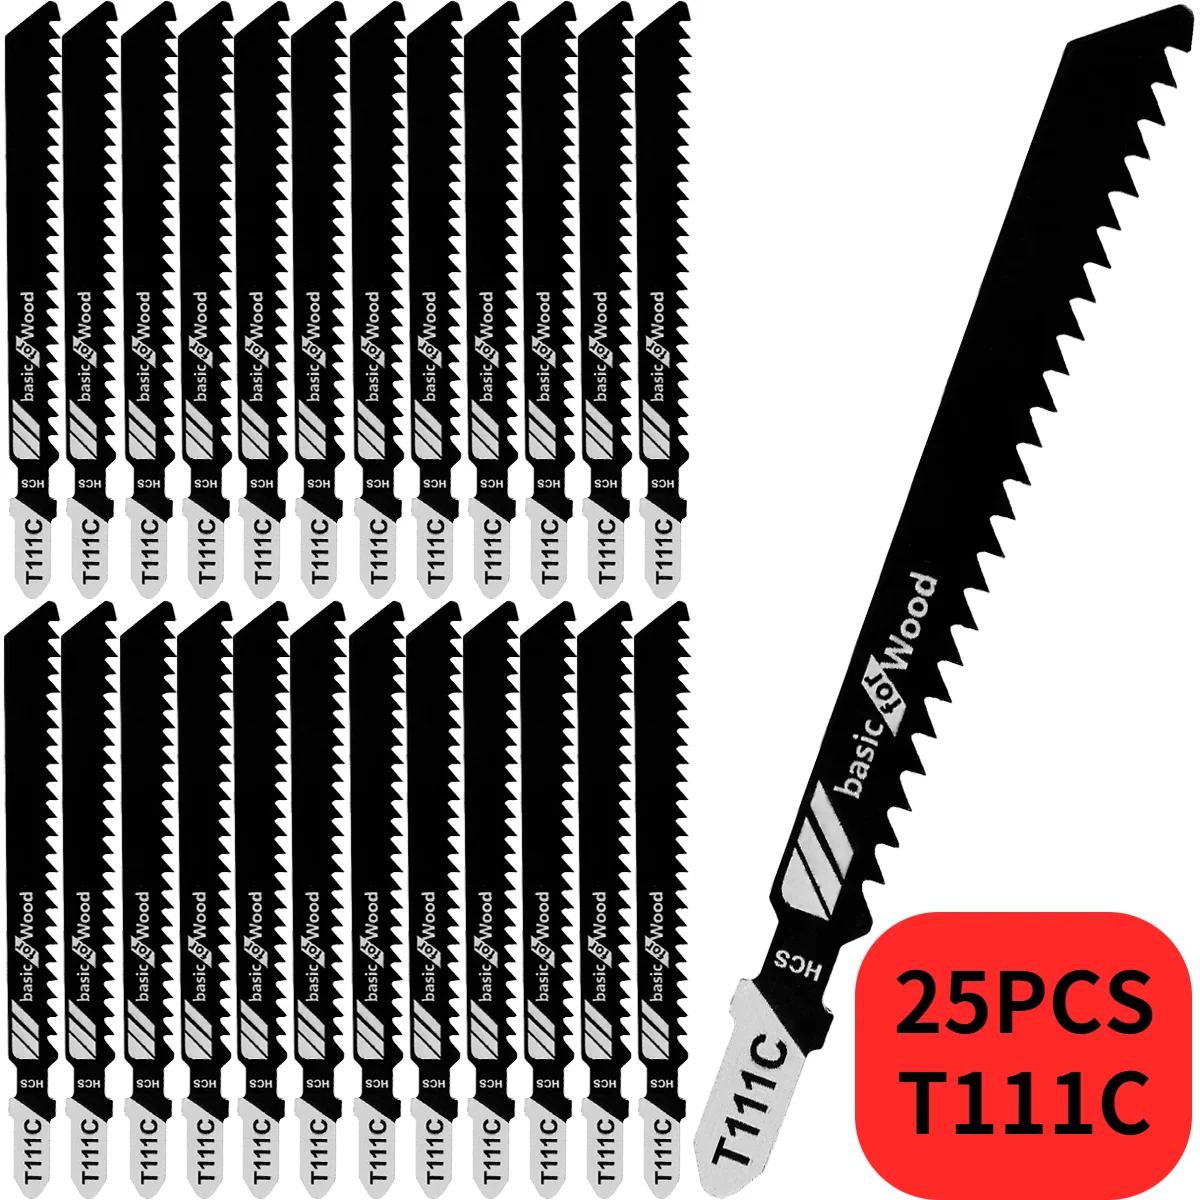 

25Pcs Jig Saw Blade Set HCS Saw Blades T-shank Fast Cut Down Jigsaw Blade Jig Saw Cutter Accessories T101AO /T101B /T111C/T101BR